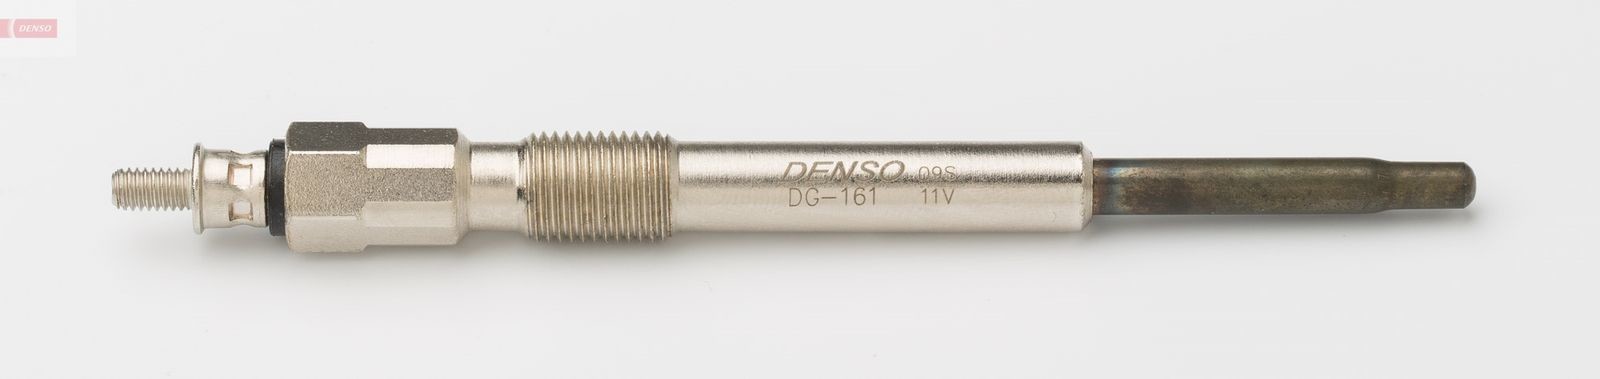 Žhavicí svíčka DENSO WYPRZEDA˝ DG-161